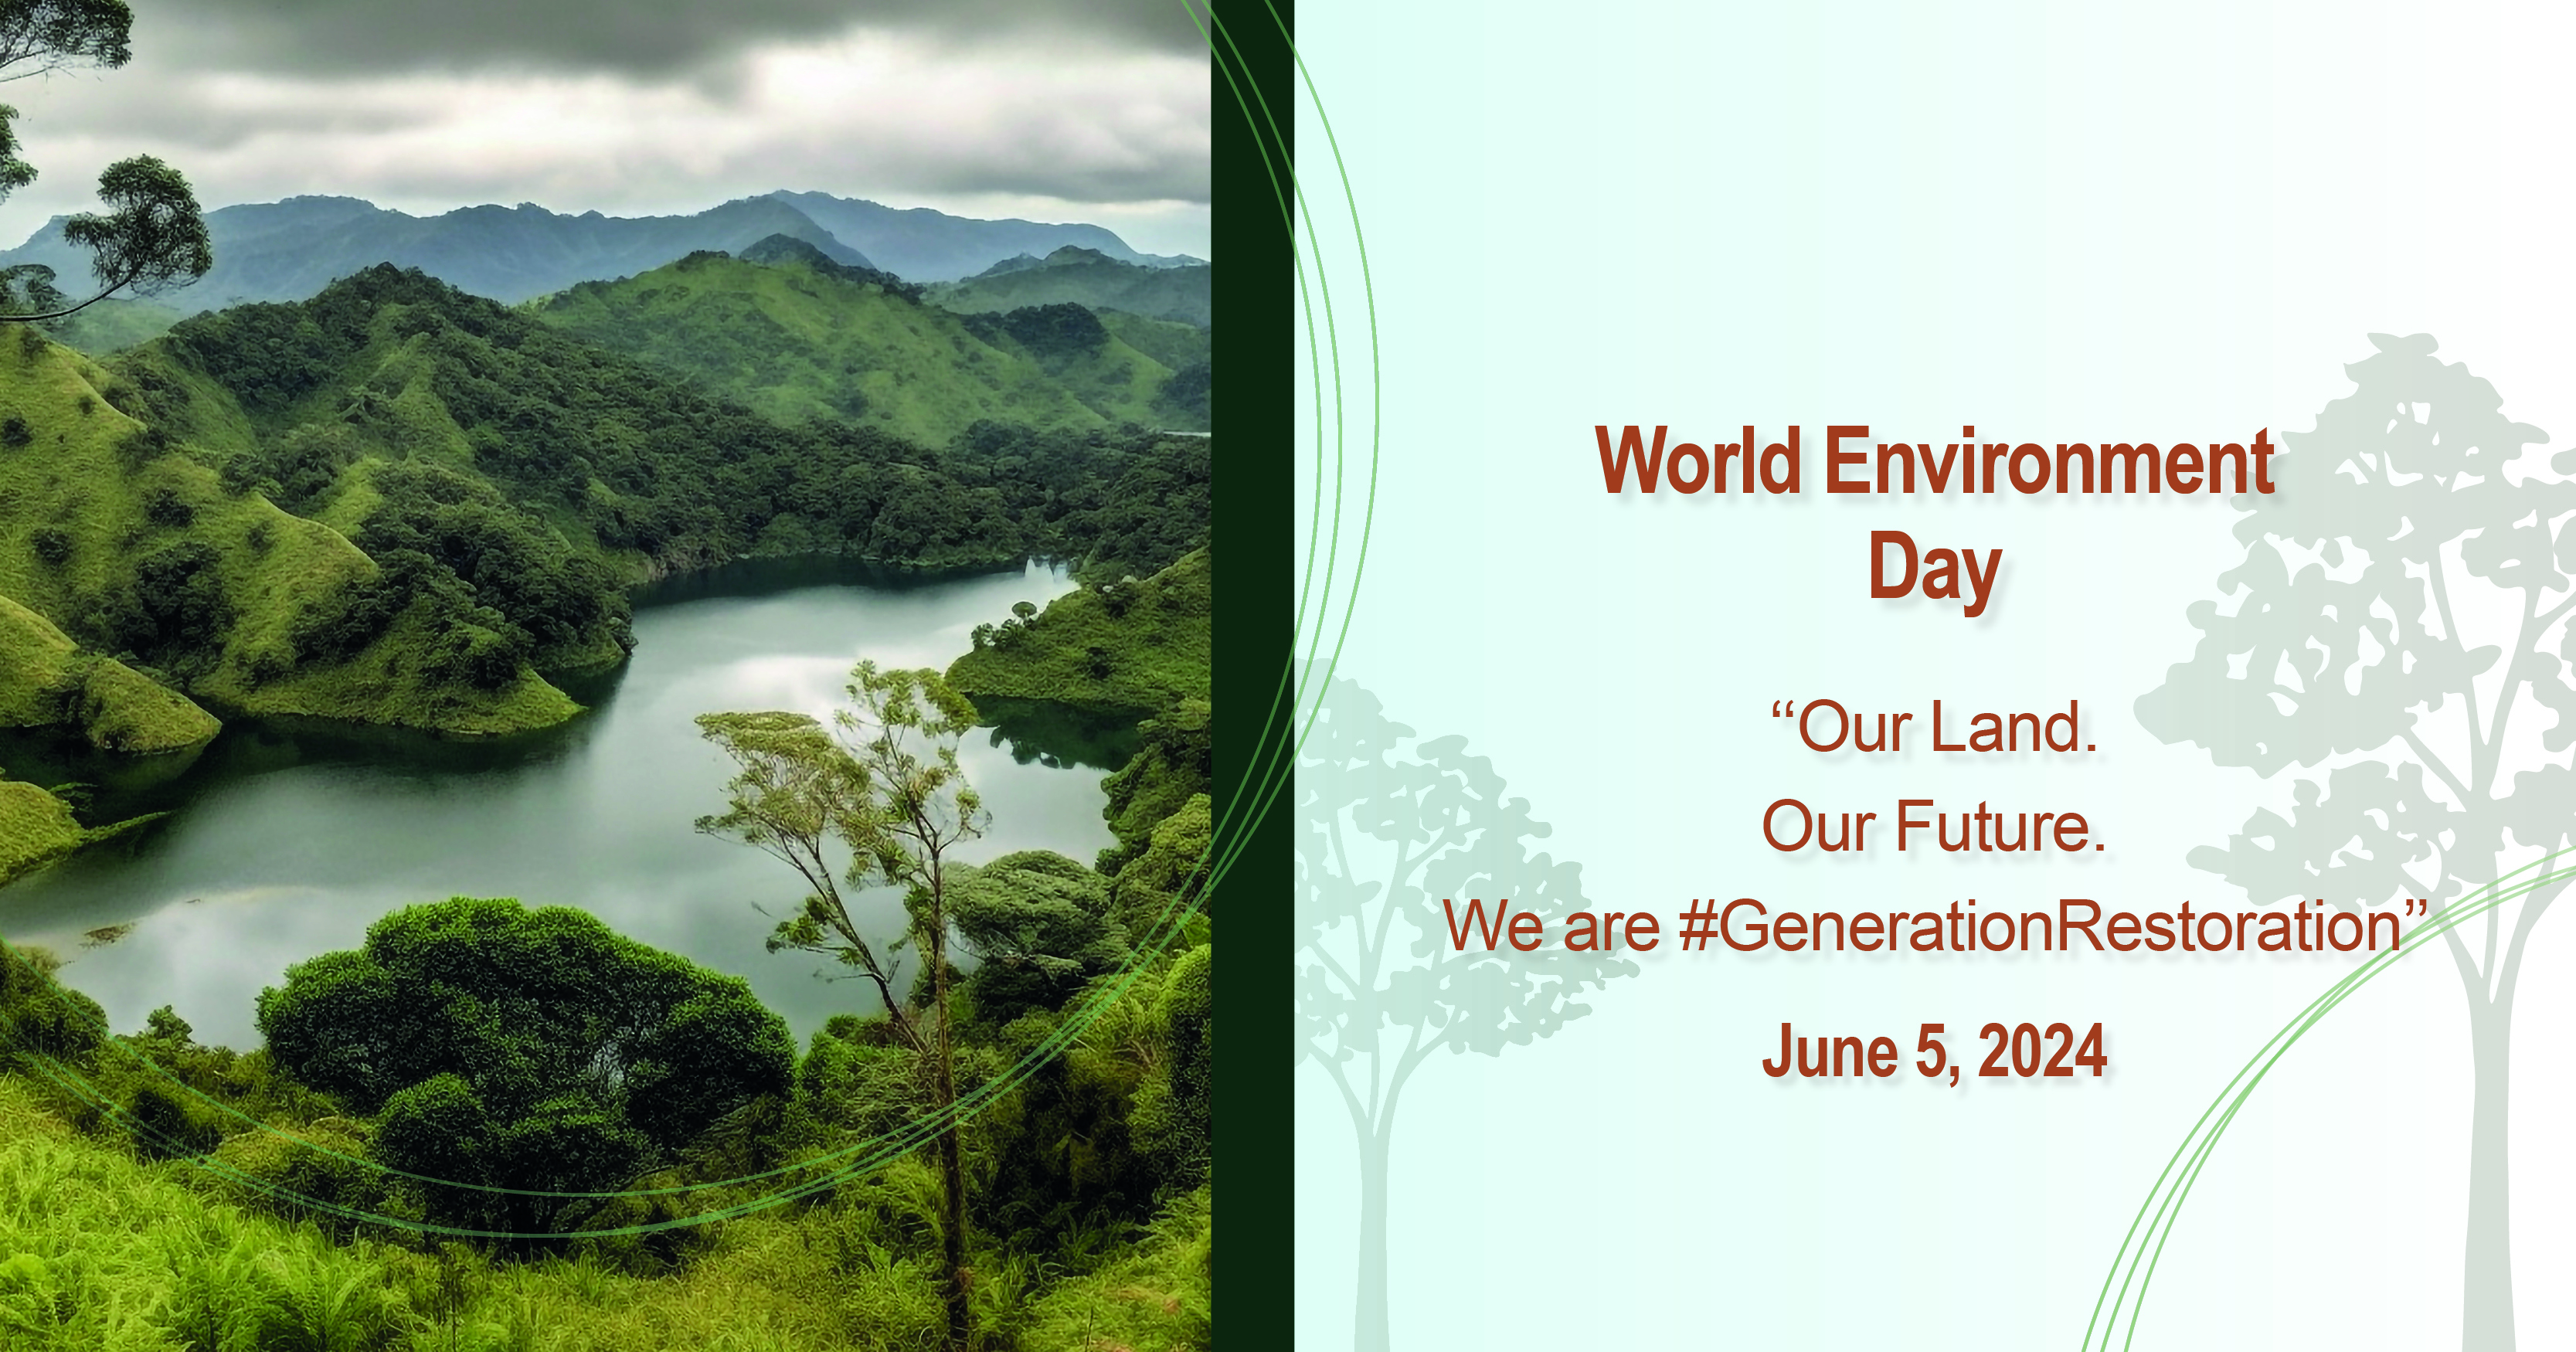 World Environment Day - June 5, 2024 